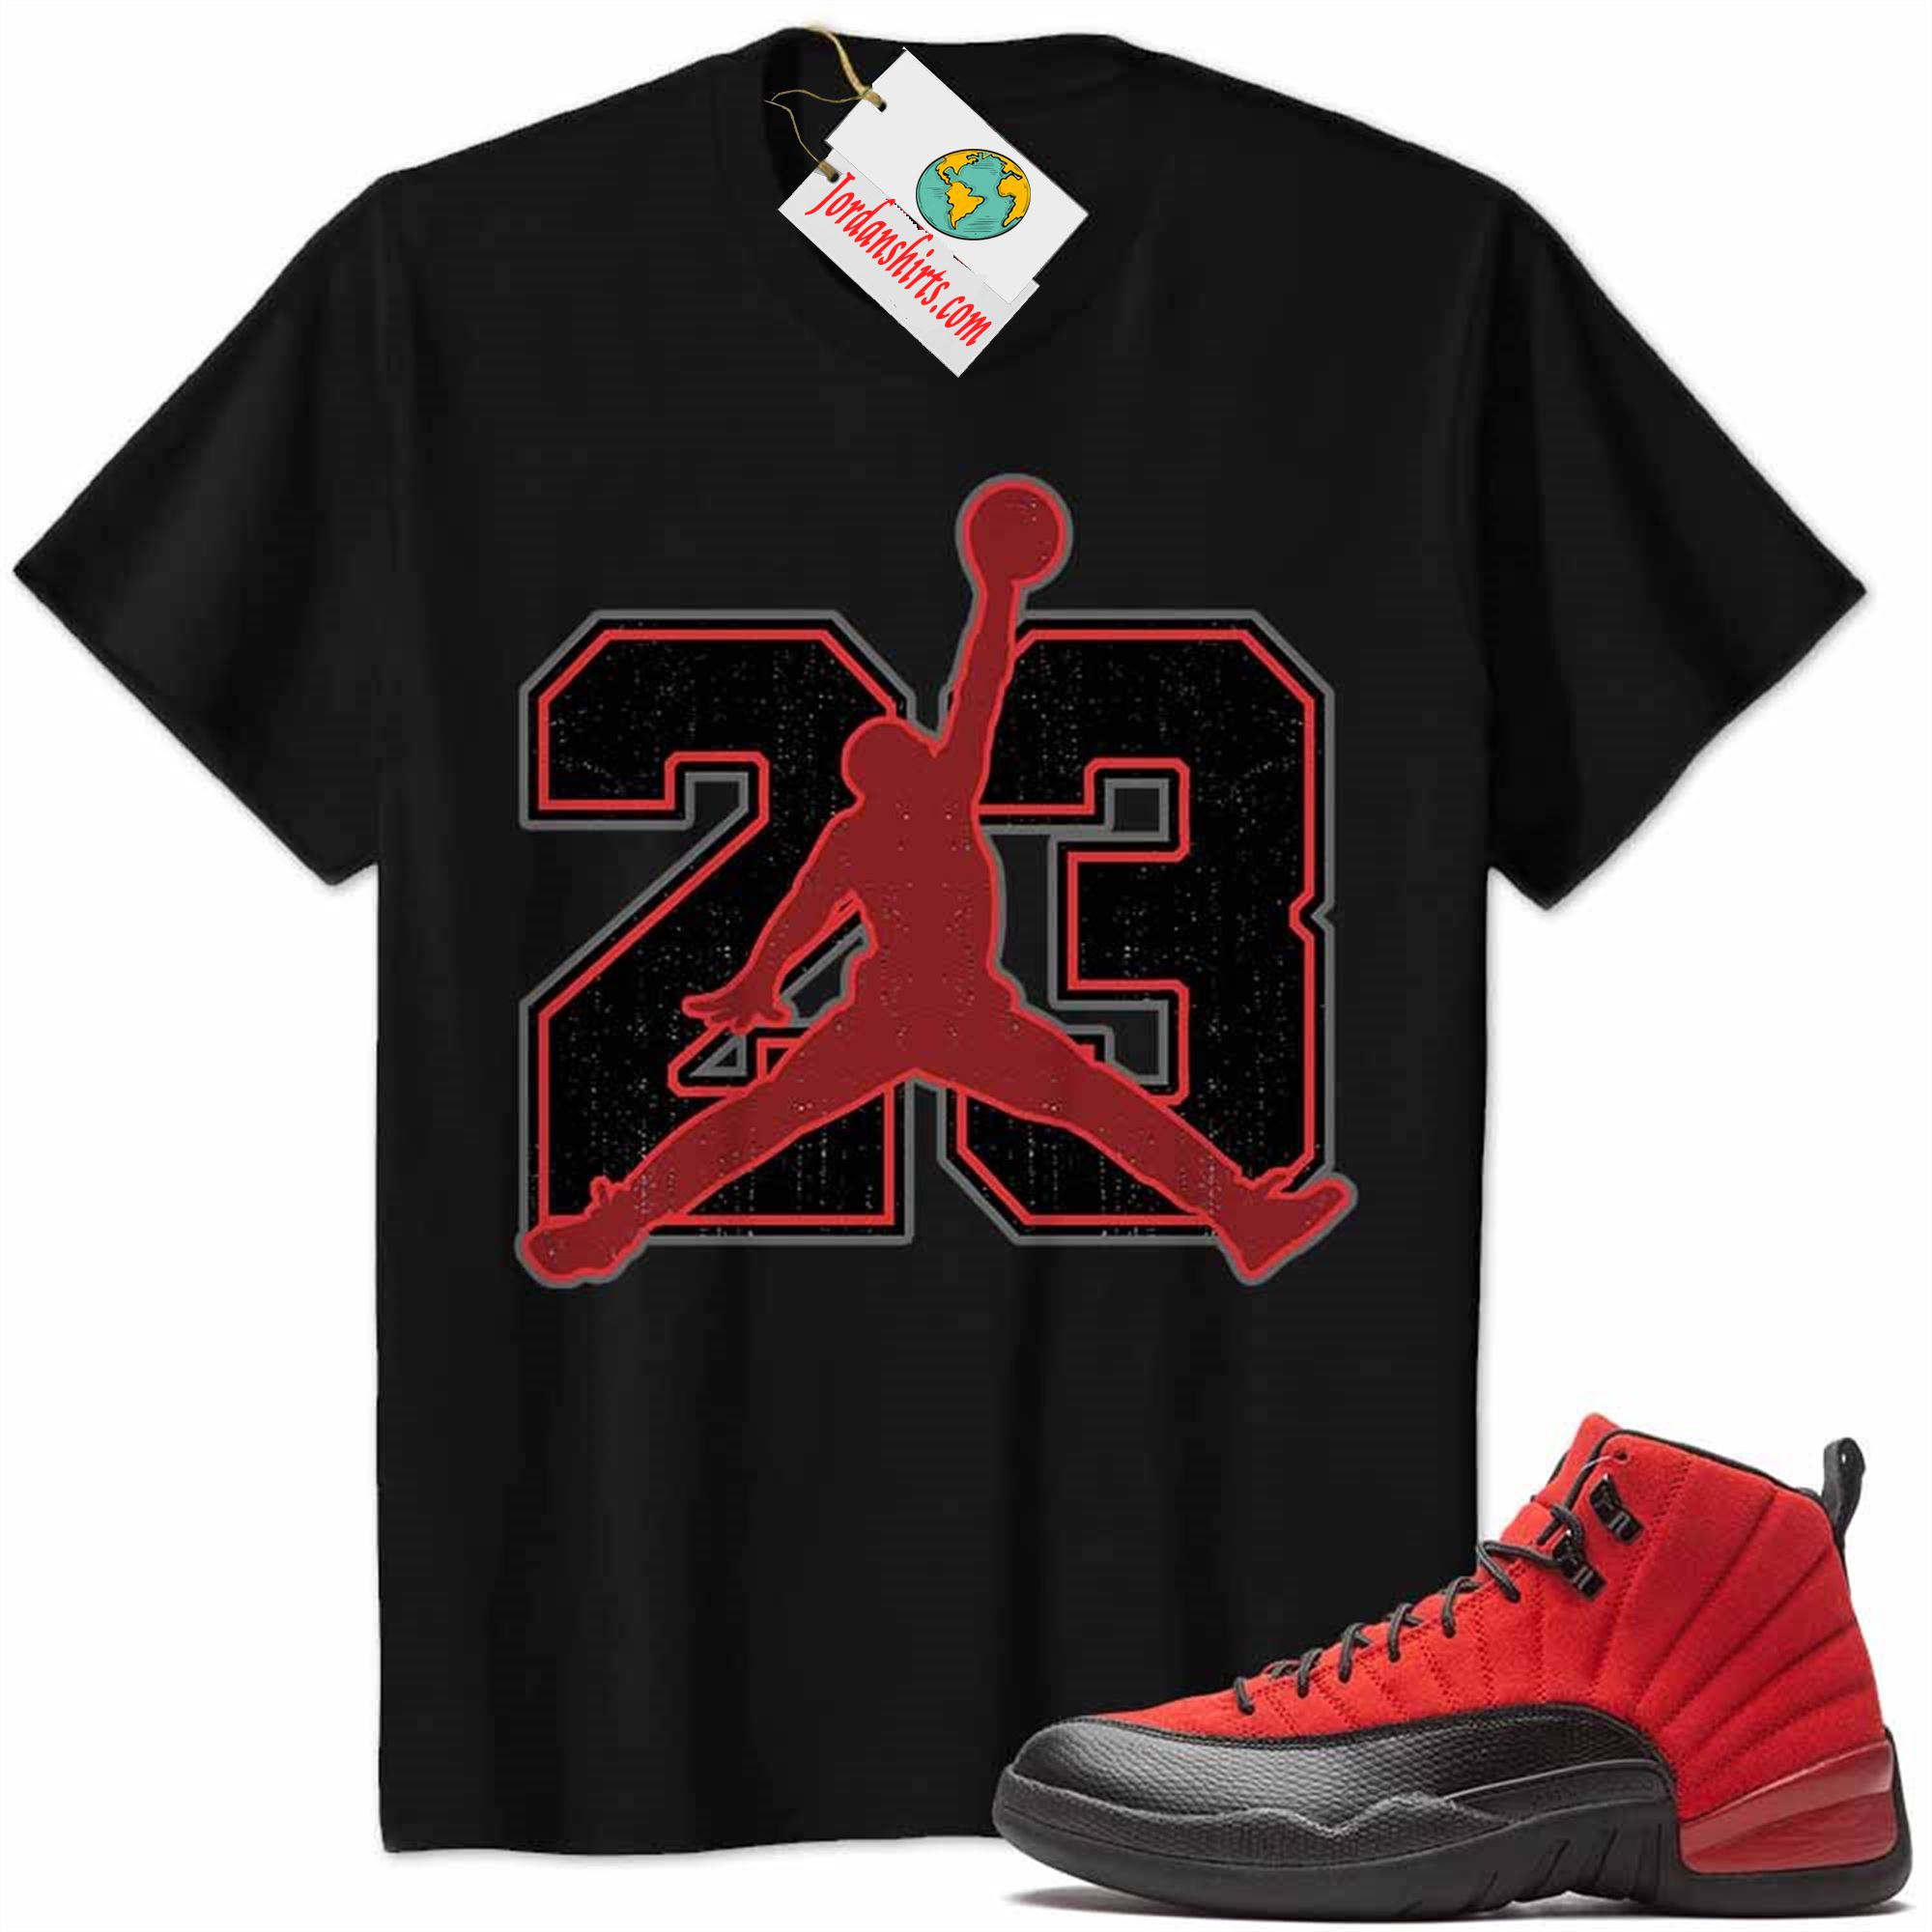 Jordan 12 Shirt, Jordan 12 Reverse Flu Game Shirt Jumpman No23 Black Plus Size Up To 5xl